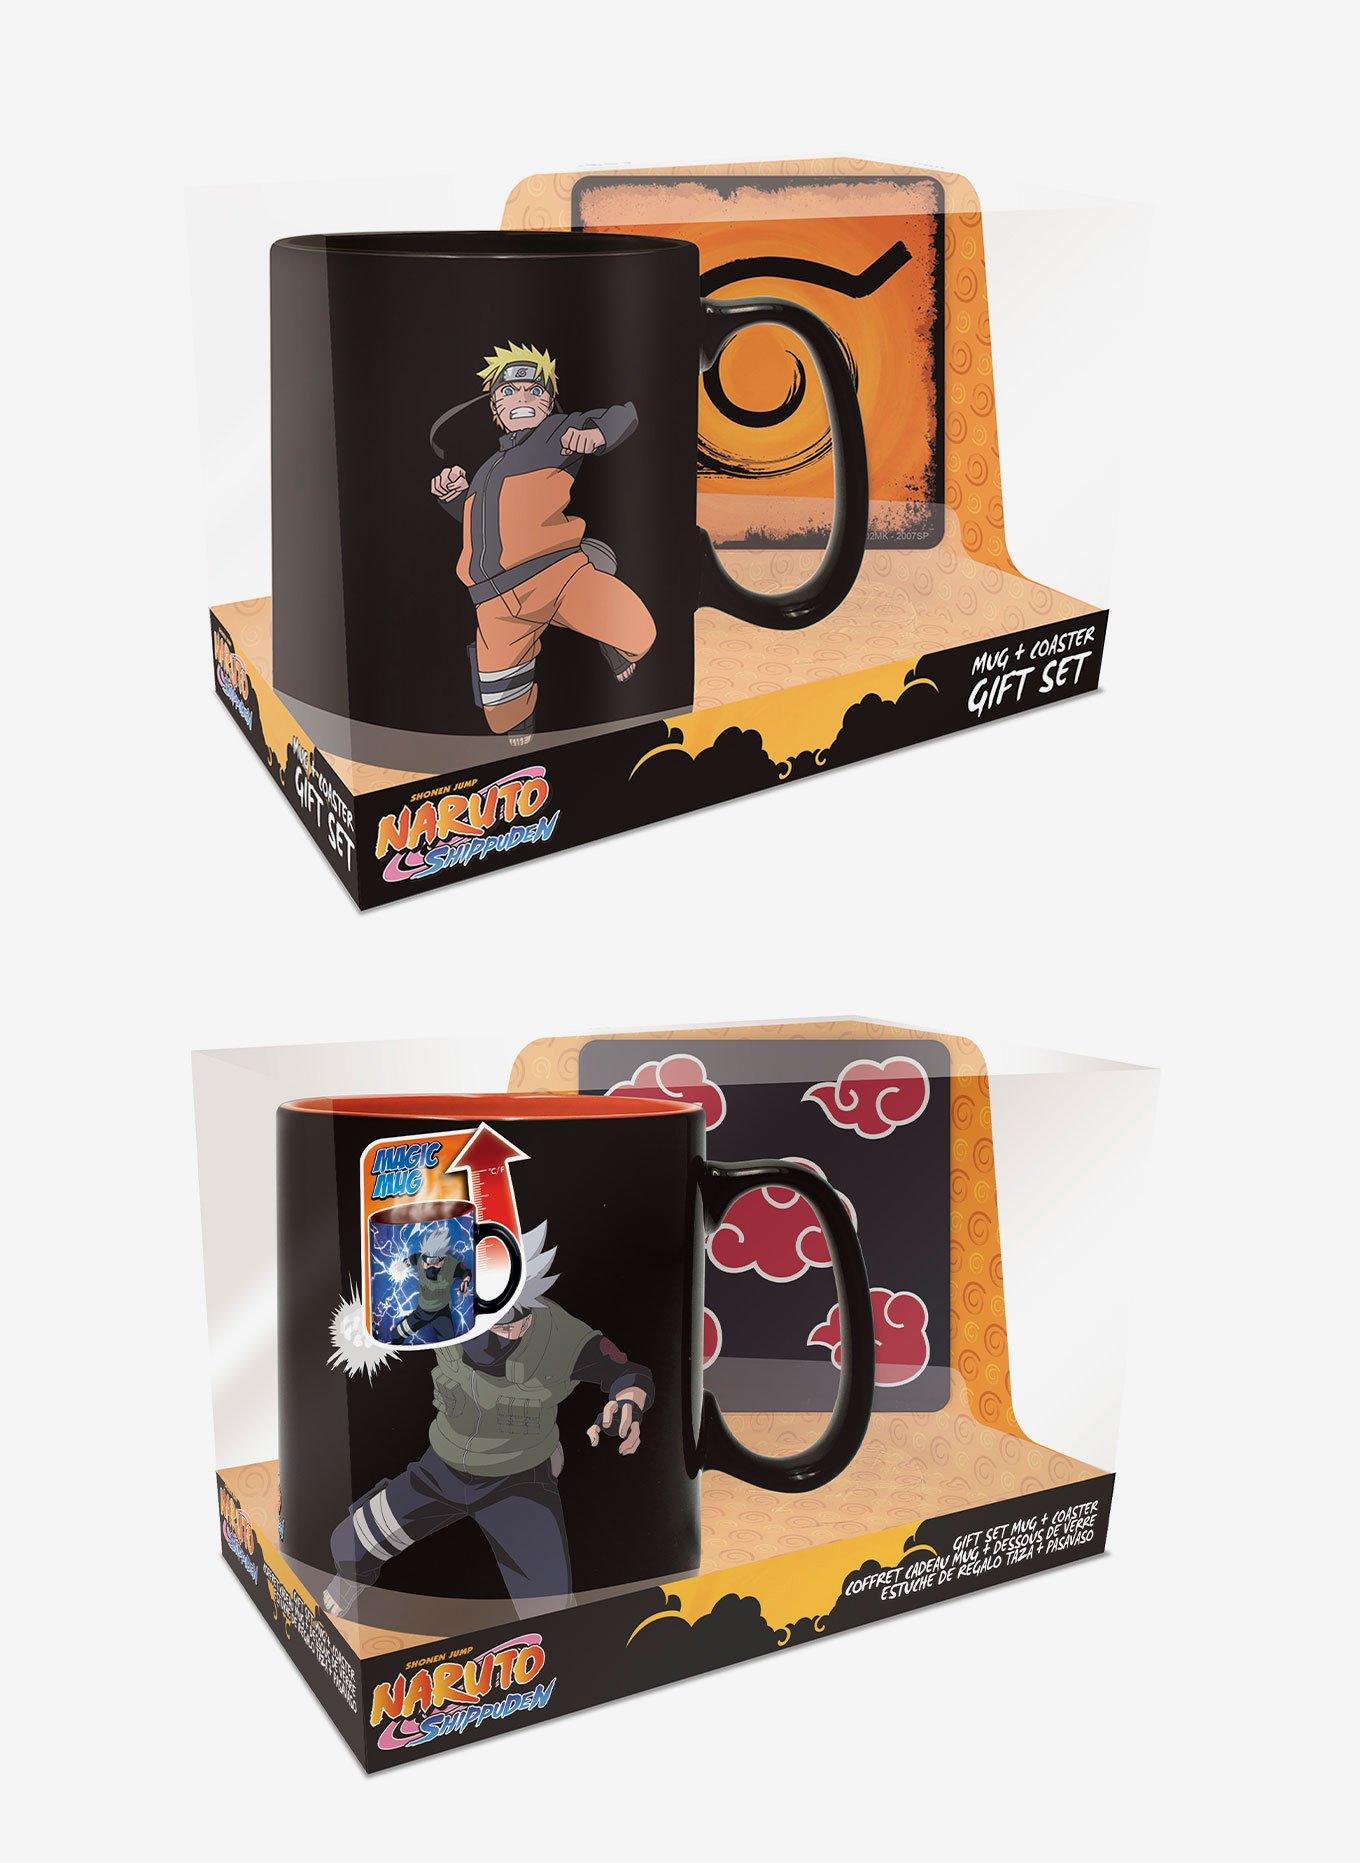 Naruto Shippuden Gift Set Assortment Includes Akatsuki Cloud Print And The Konoha Symbol Coasters, , hi-res